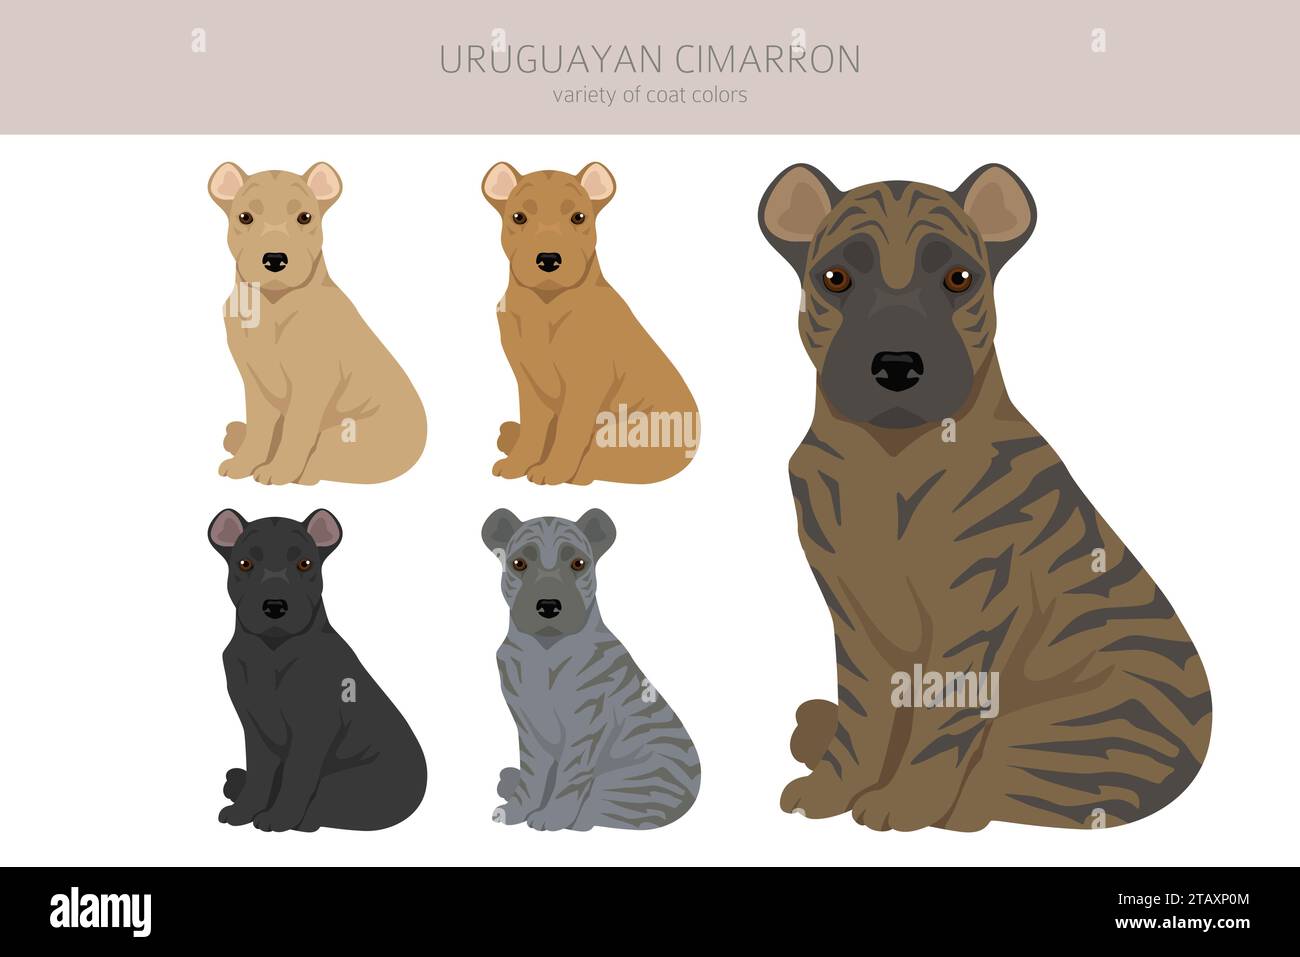 Uruguayan Cimarron puppy clipart. All coat colors set.  All dog breeds characteristics infographic. Vector illustration Stock Vector